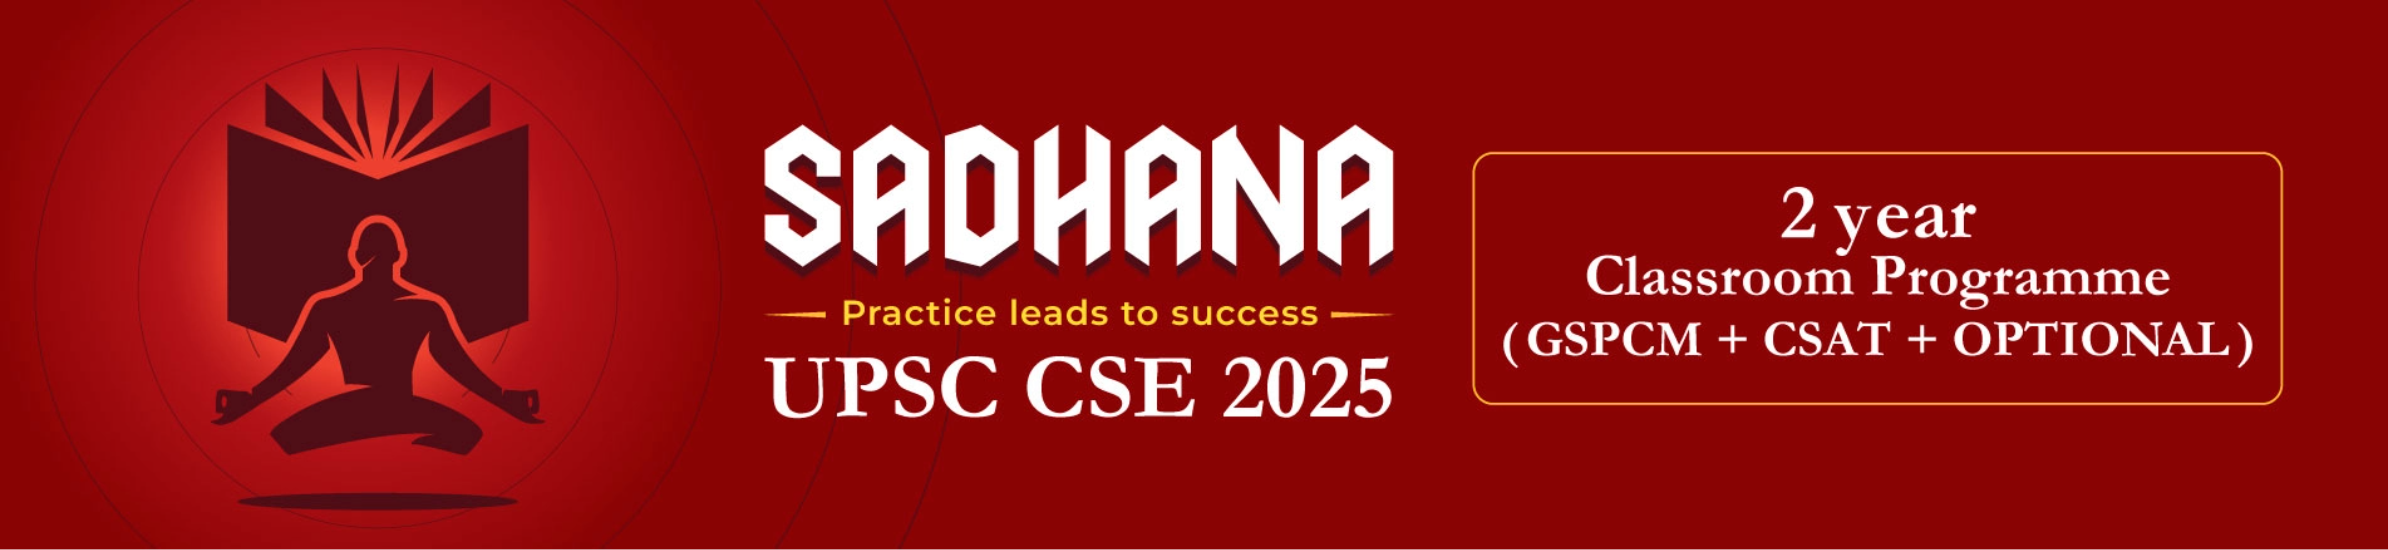 Sadhana UPSC CSE 2025 two year classroom programme banner